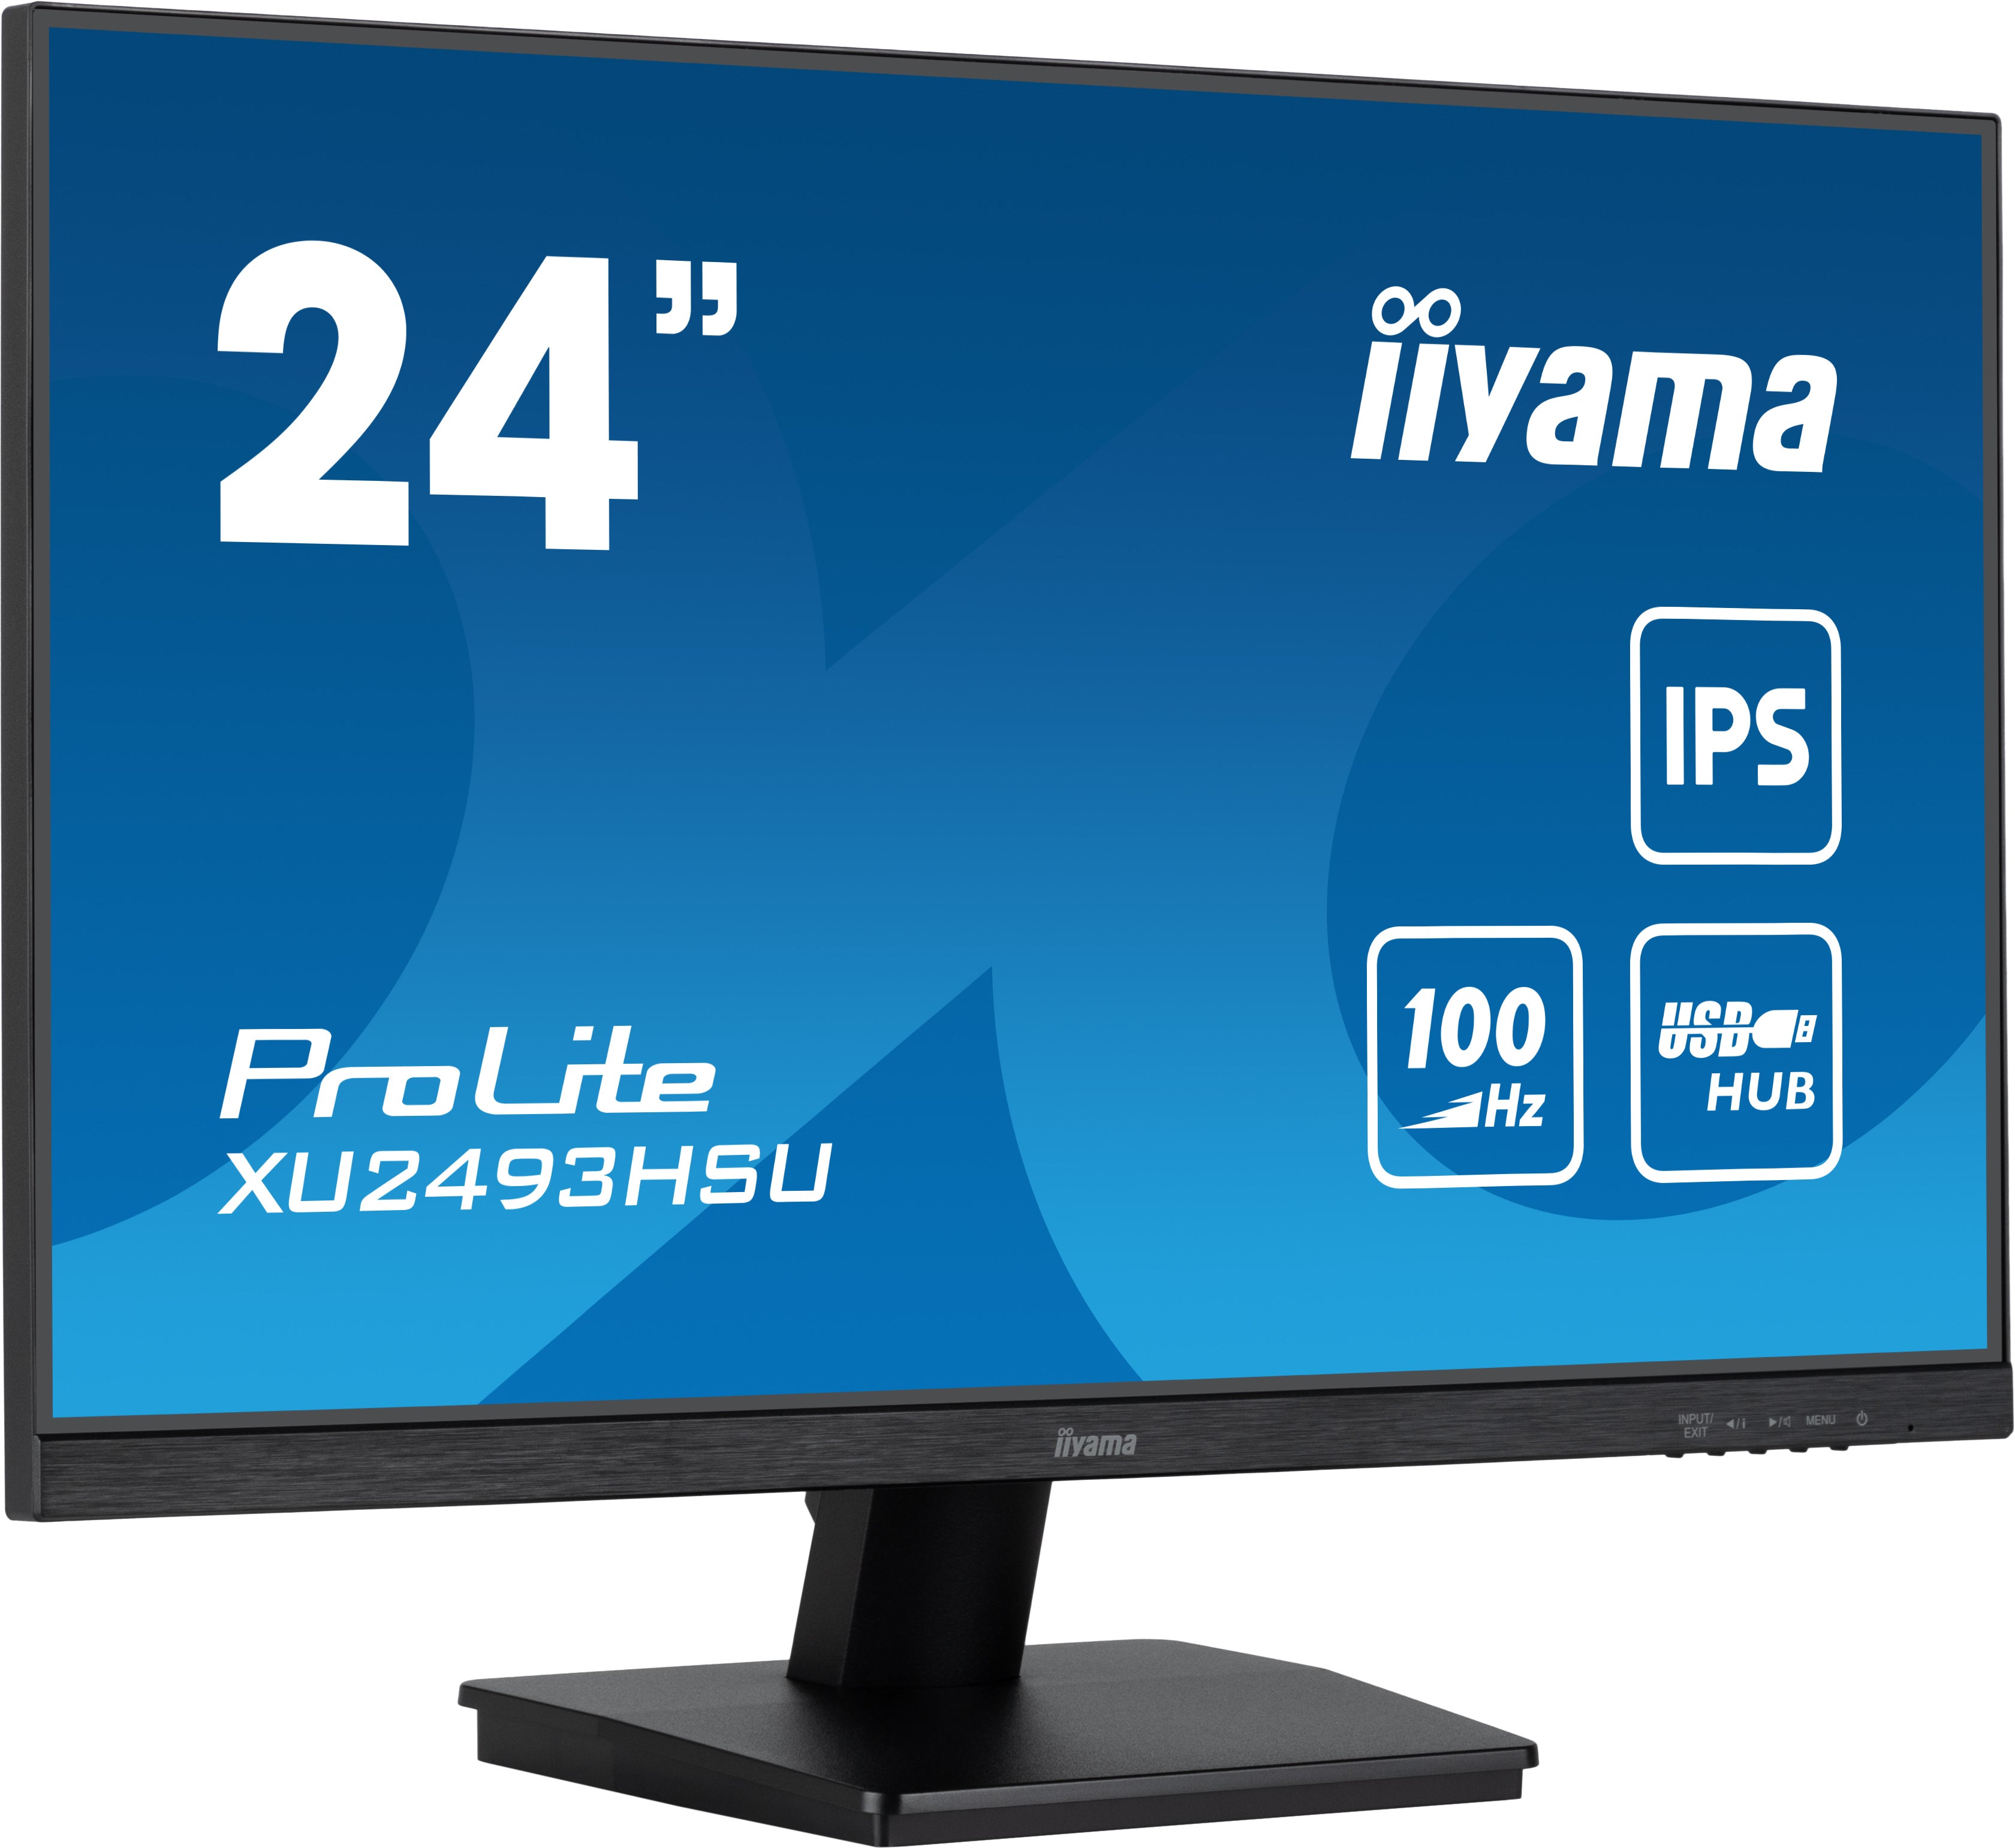 iiyama ProLite XU2493HSU-B6 24” IPS Display with USB hub and 100Hz refresh rate